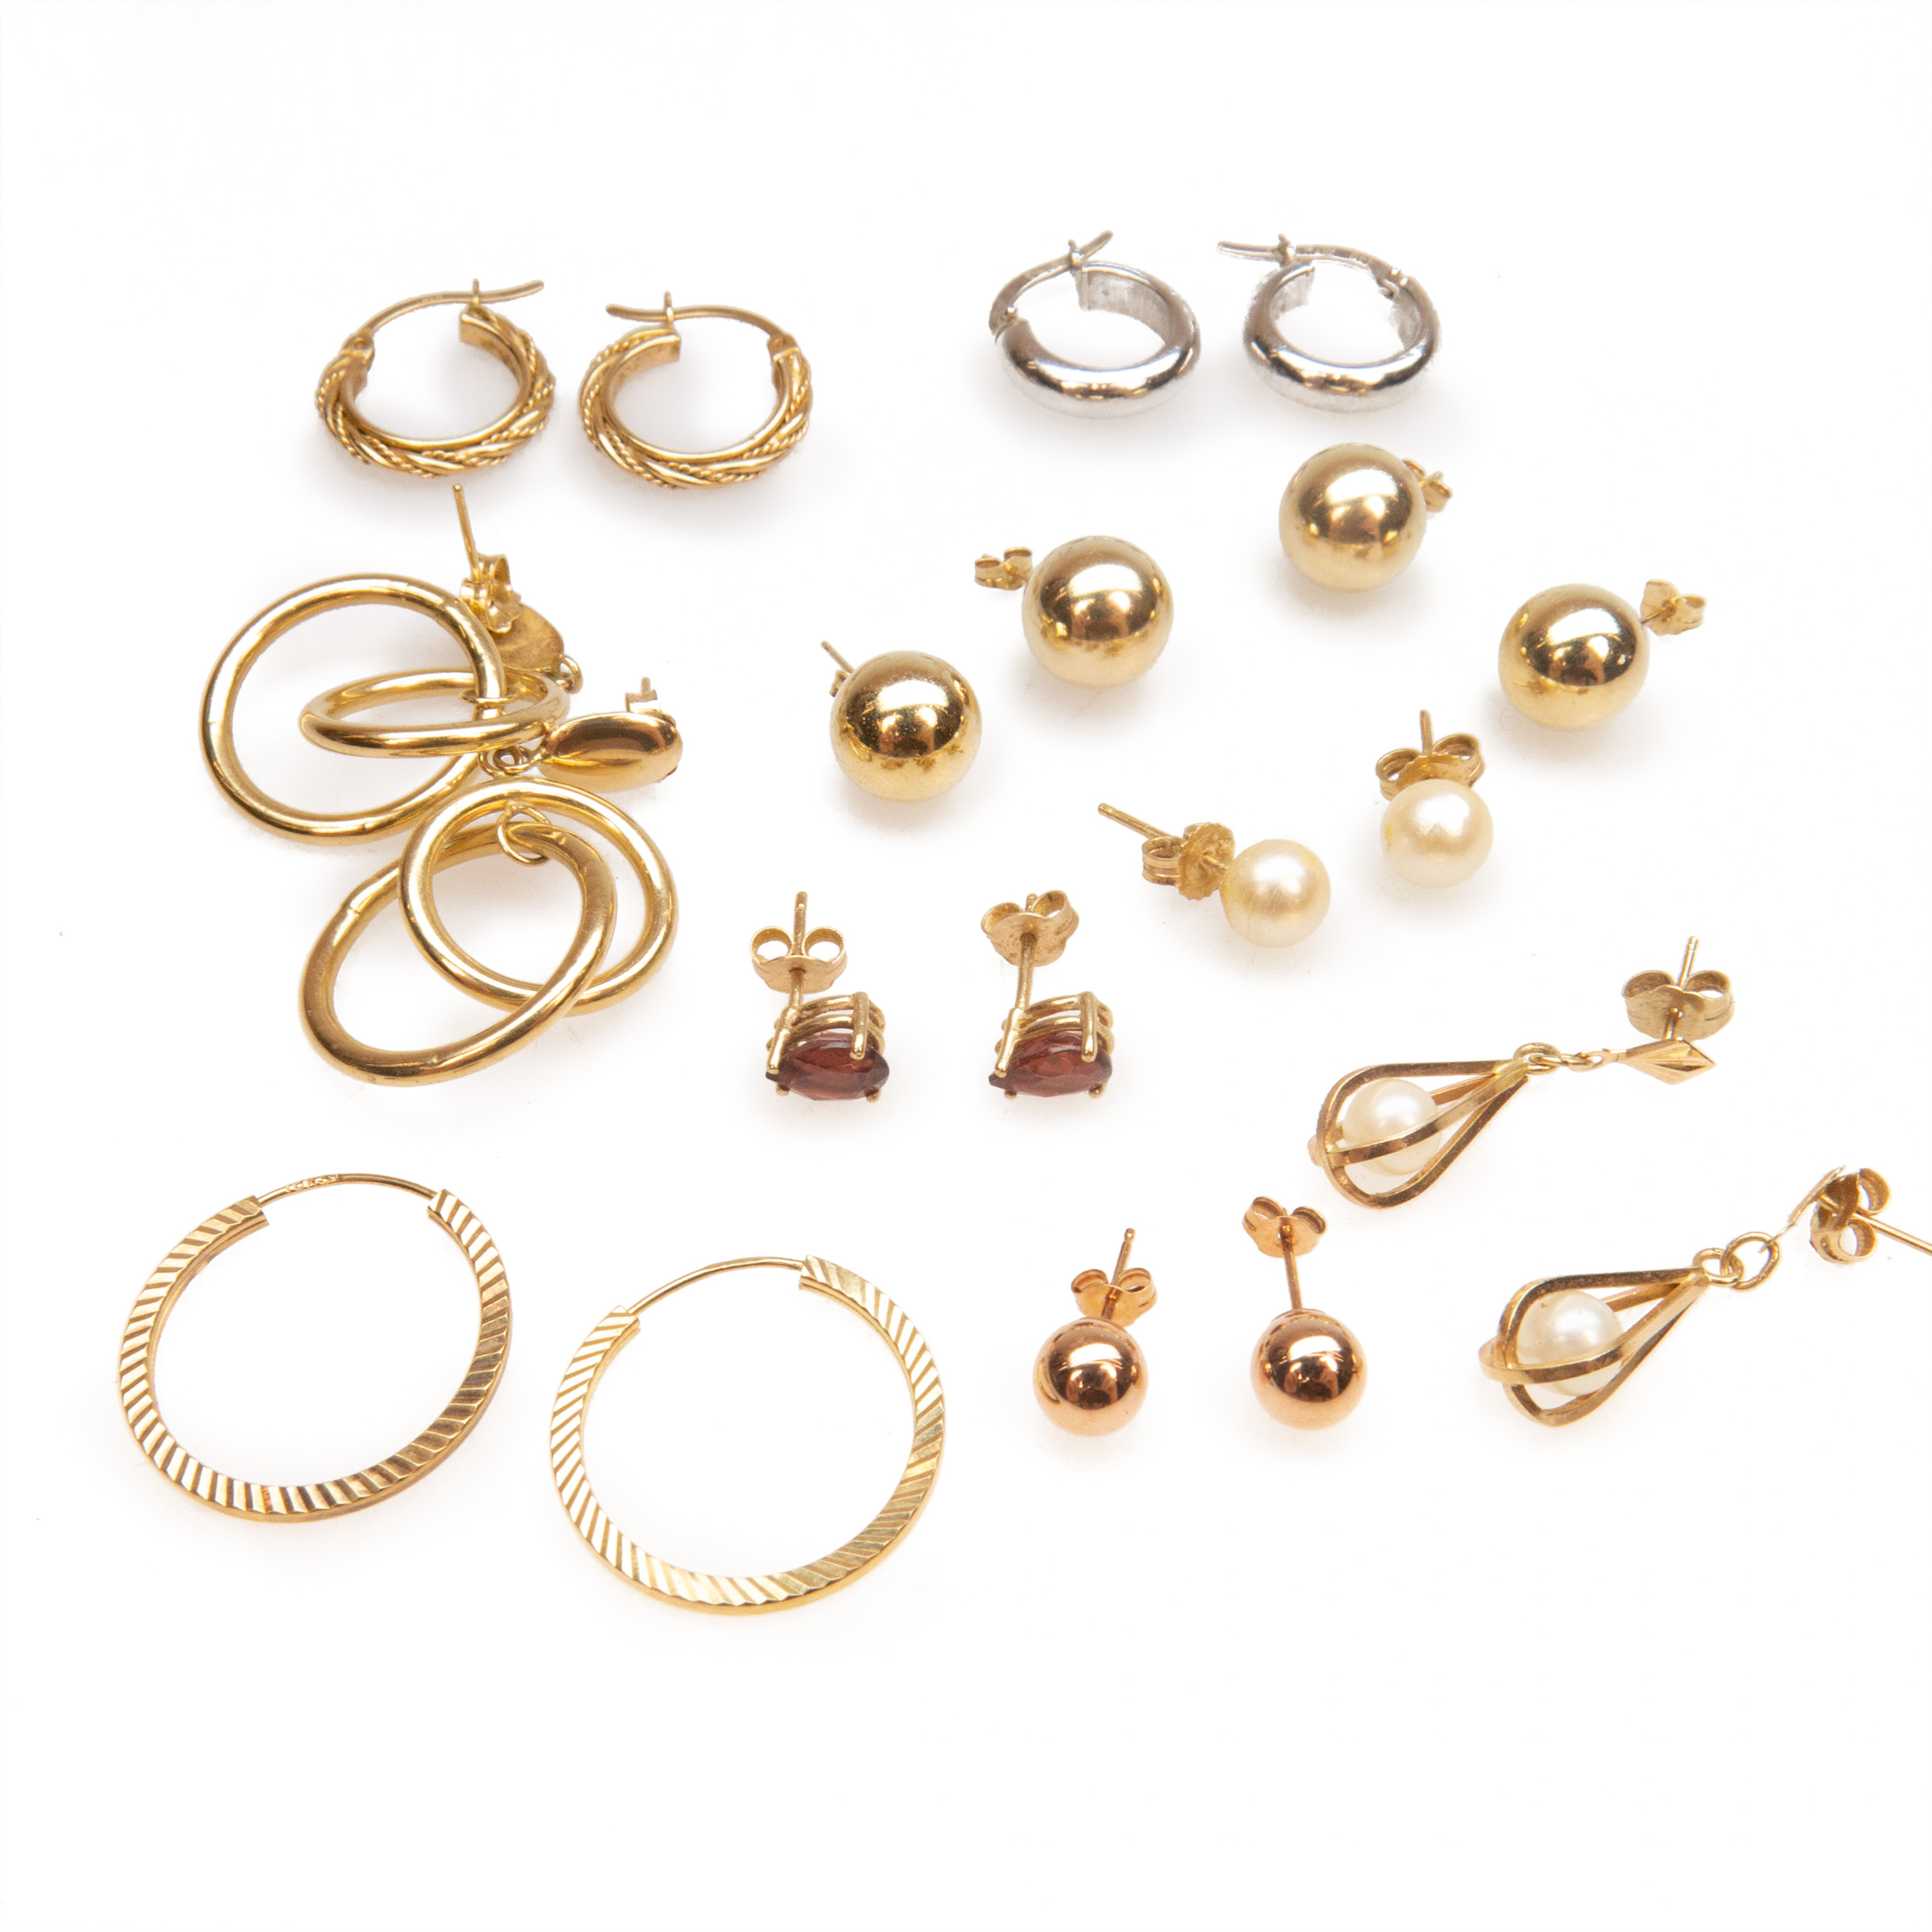 10 Pairs Of Various Gold Earrings